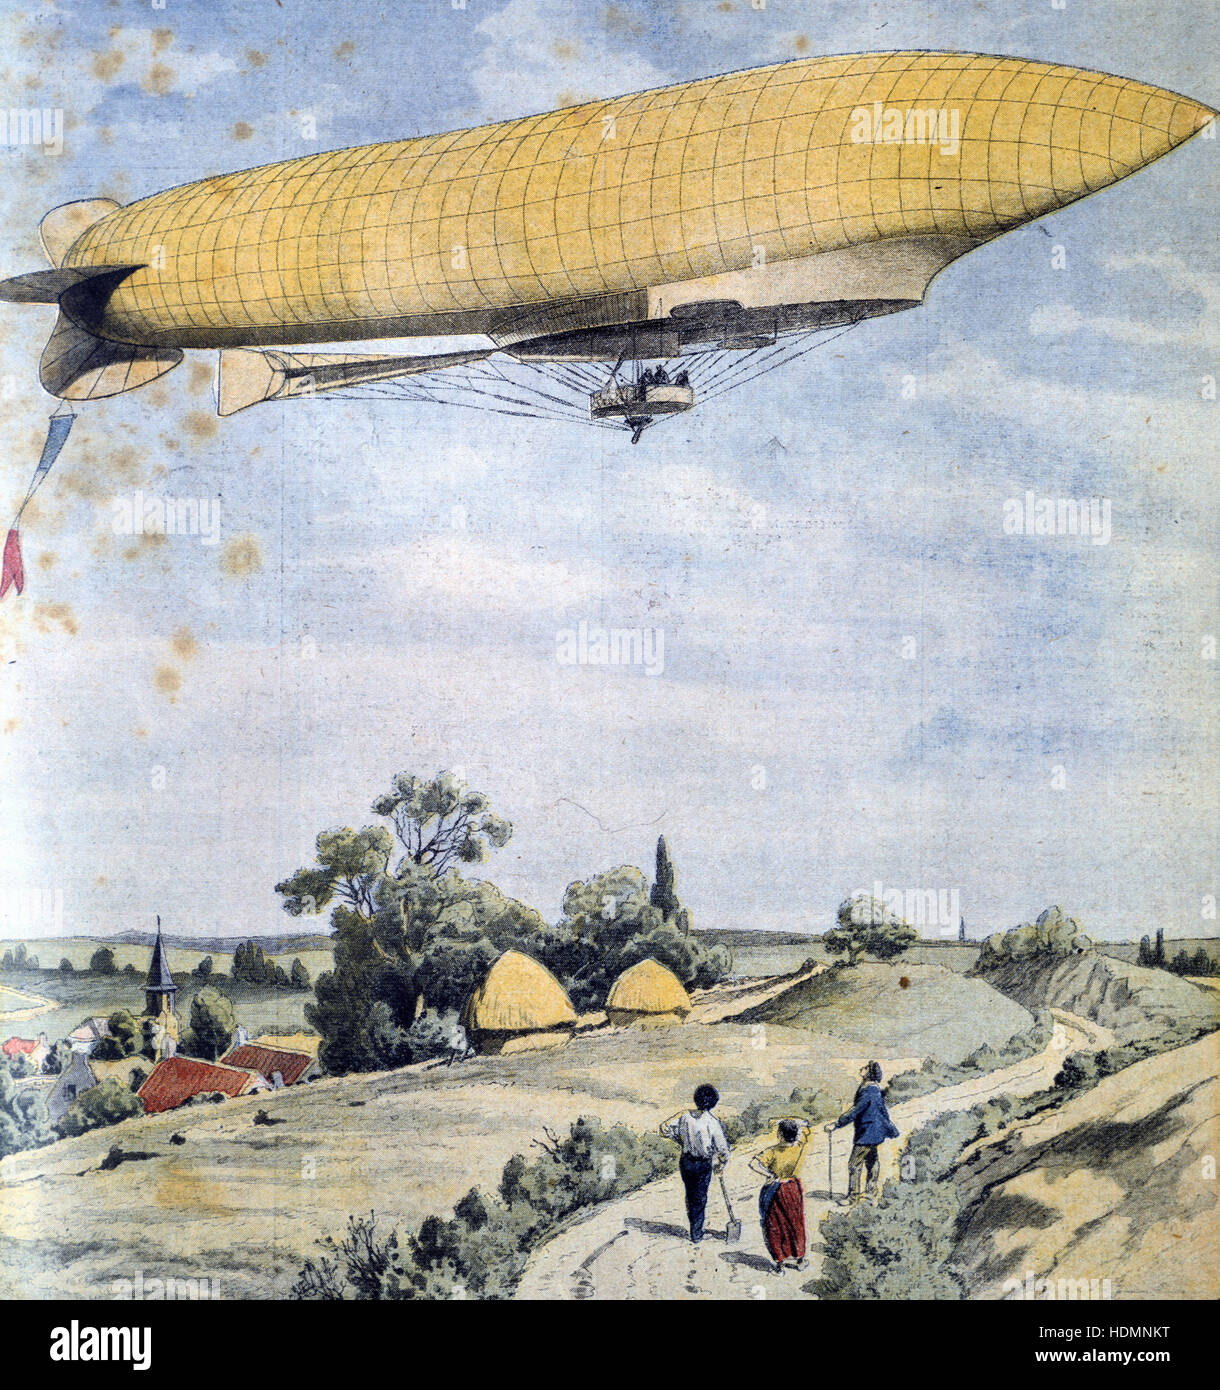 'Le Petit Journal' Paris, 20 September 1908 - French military airship La Republique on her maiden flight Stock Photo